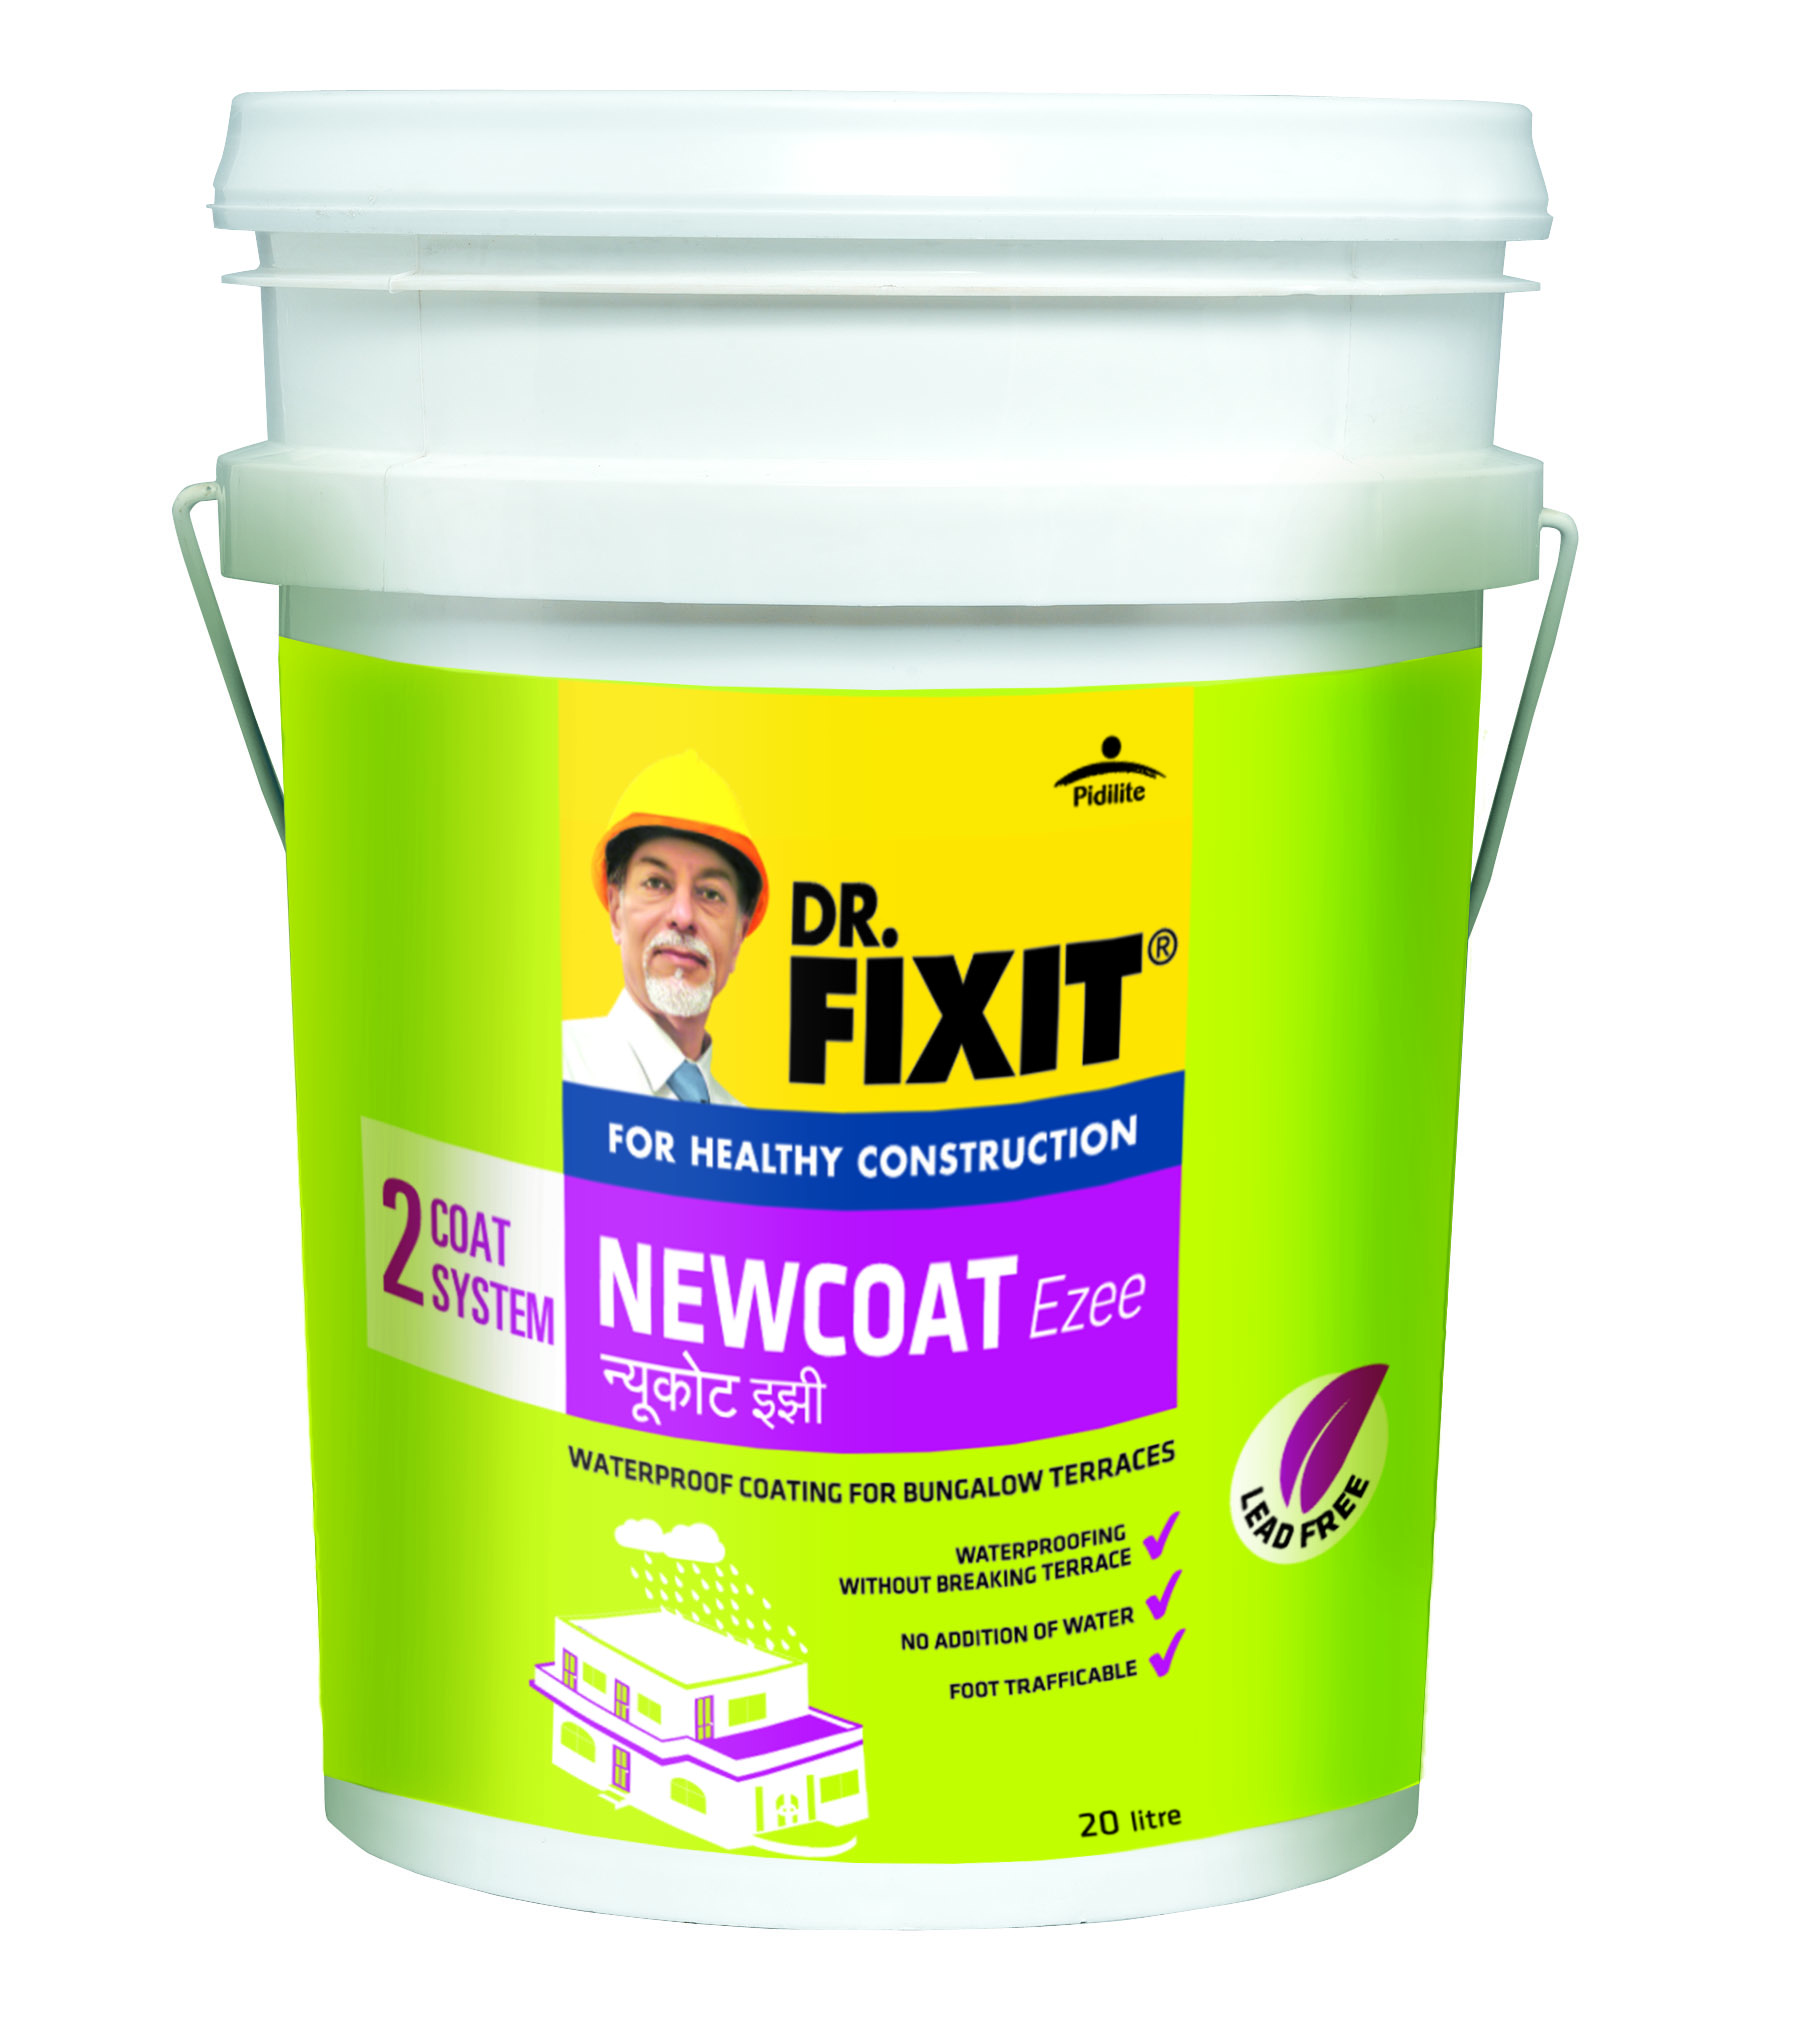 Dr Fixit Newcoat Ezee price 1 ltr, 20 litre price, colours shades, 10 4 colors